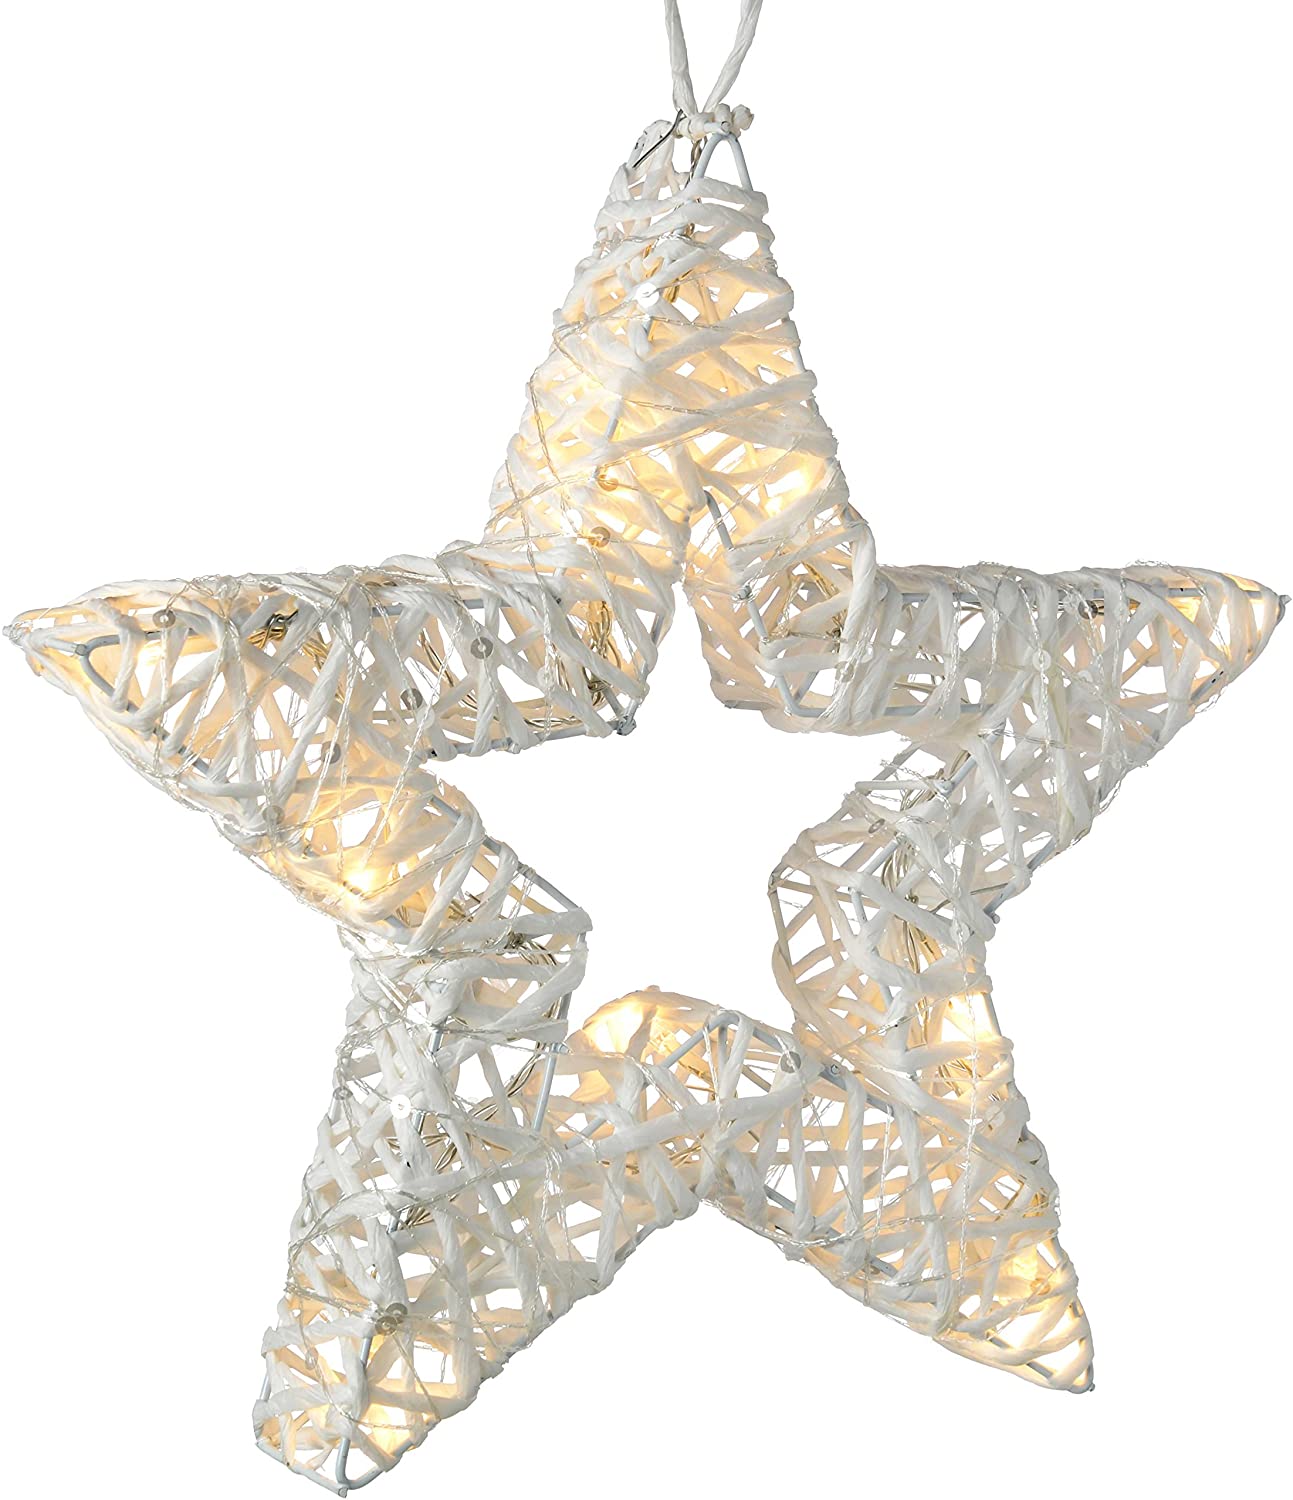 WeRChristmas 30 cm Woven Star Warm White Christmas Decoration